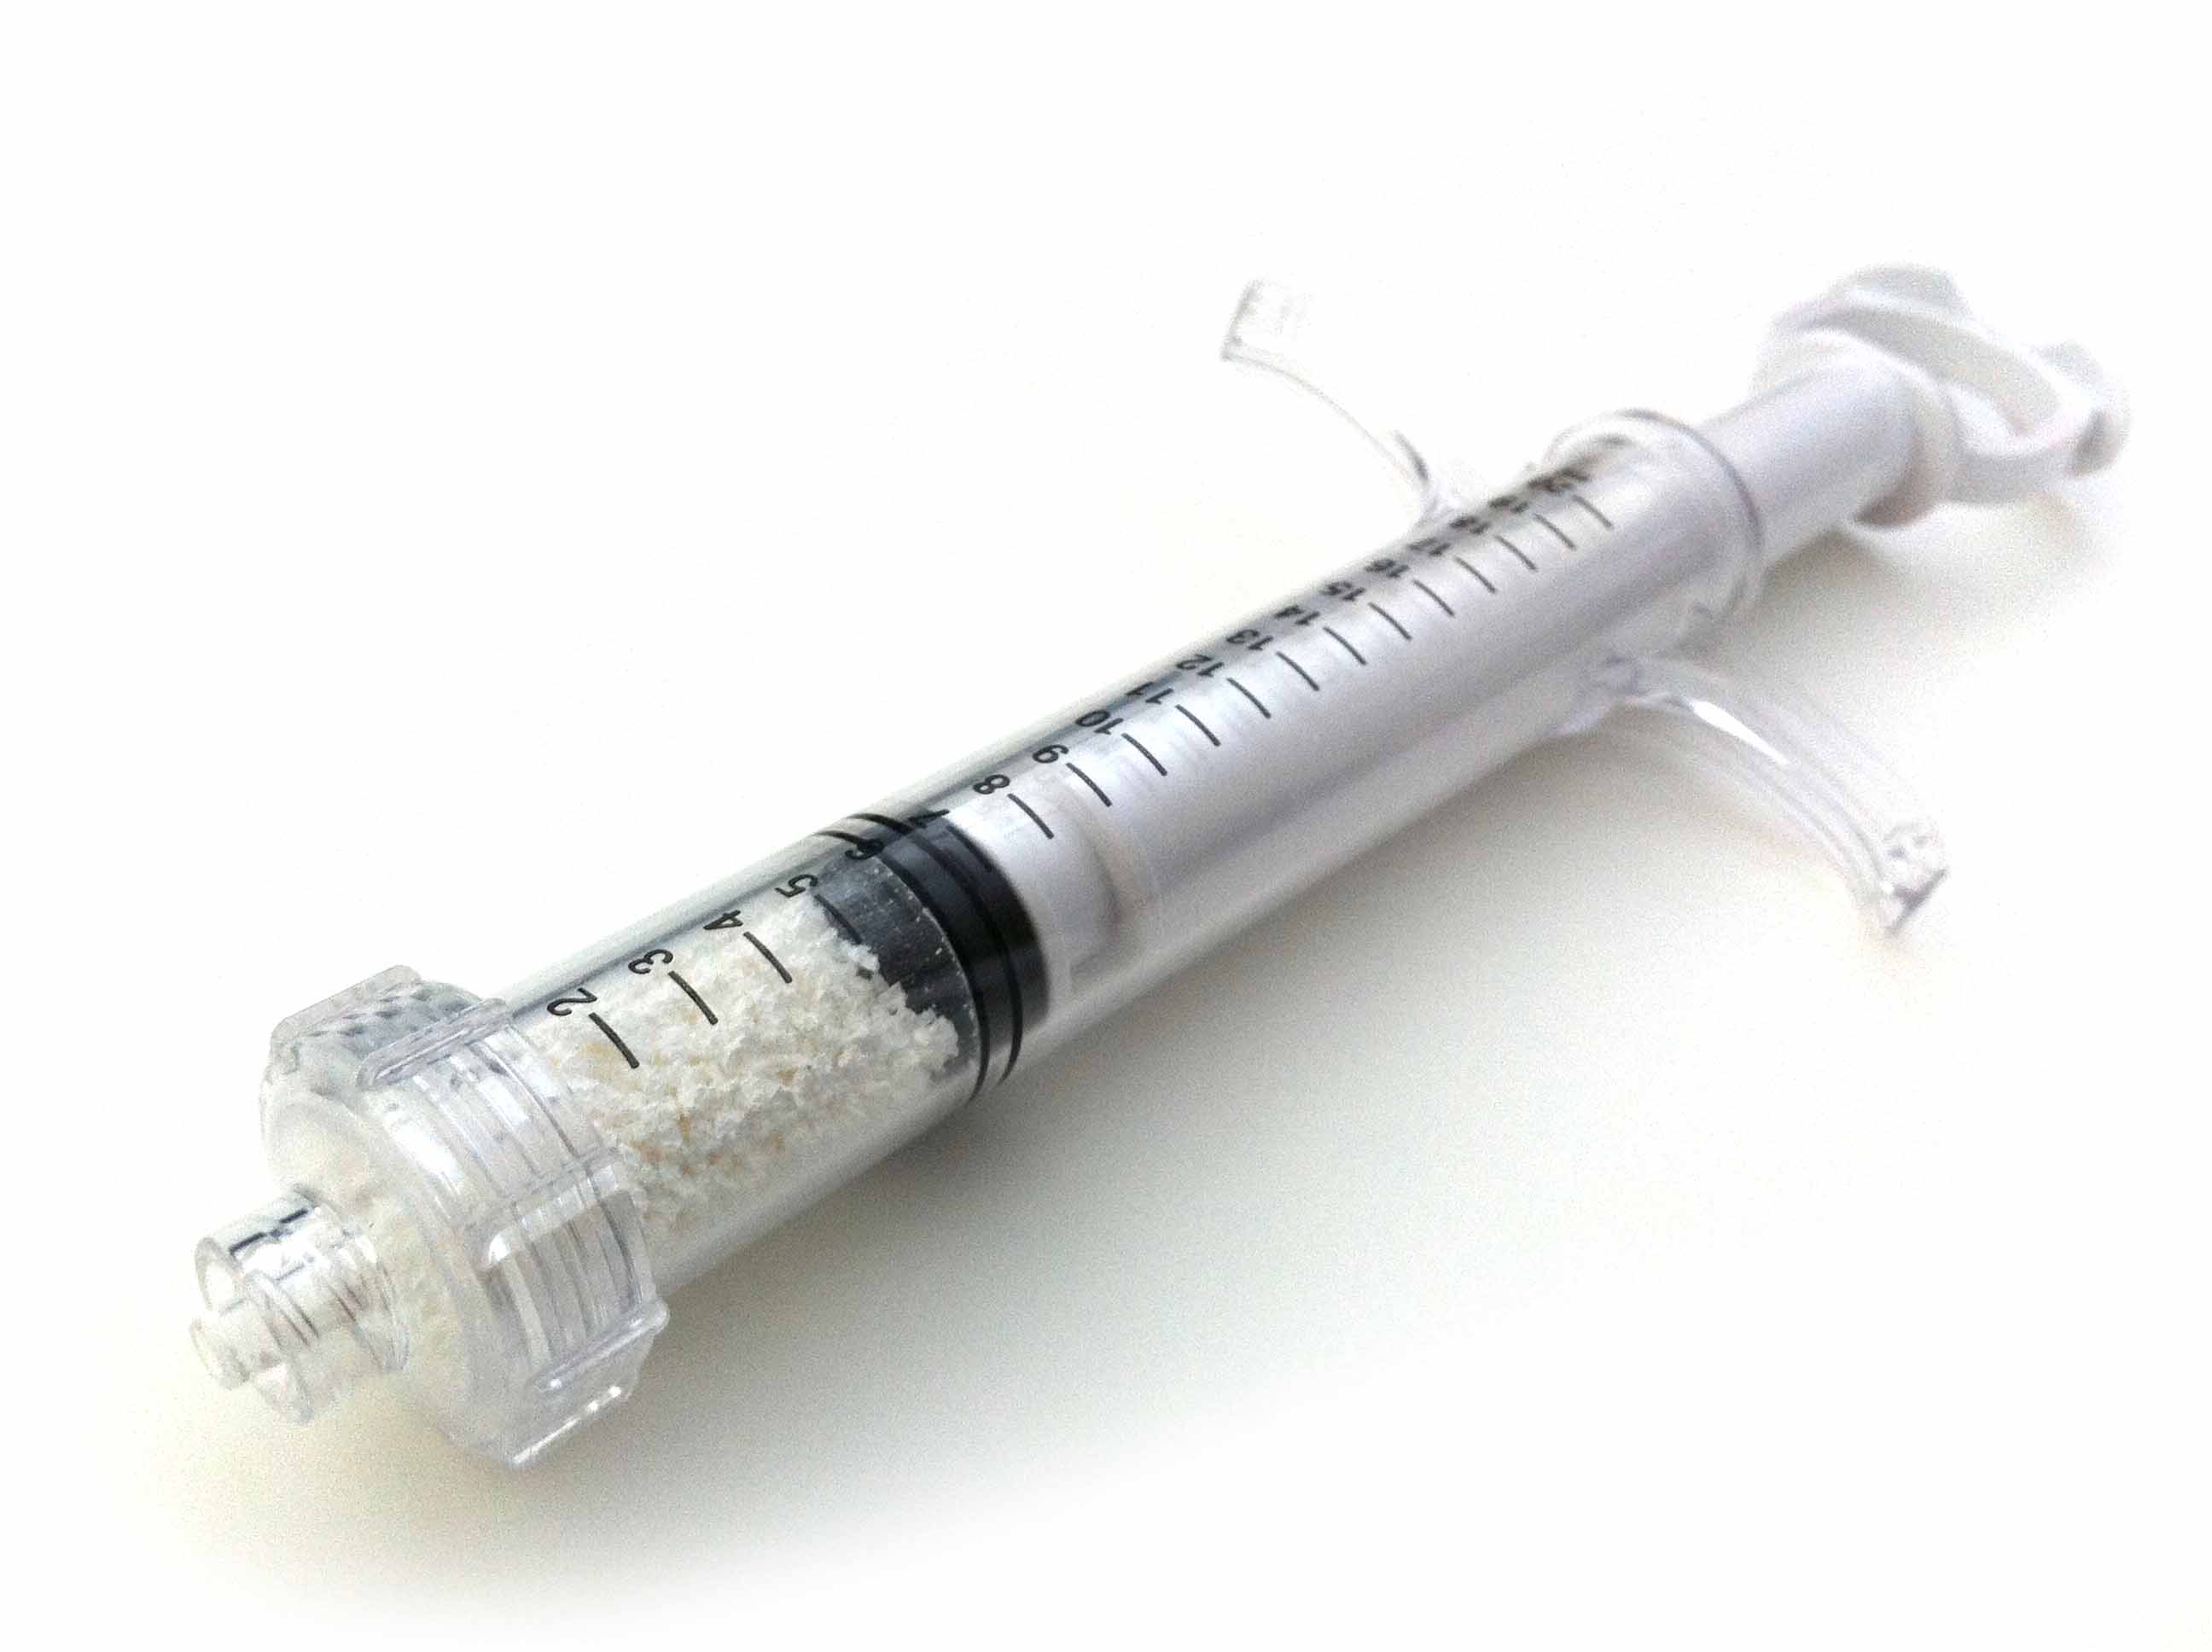 Syringe with MBCP+ Matrix